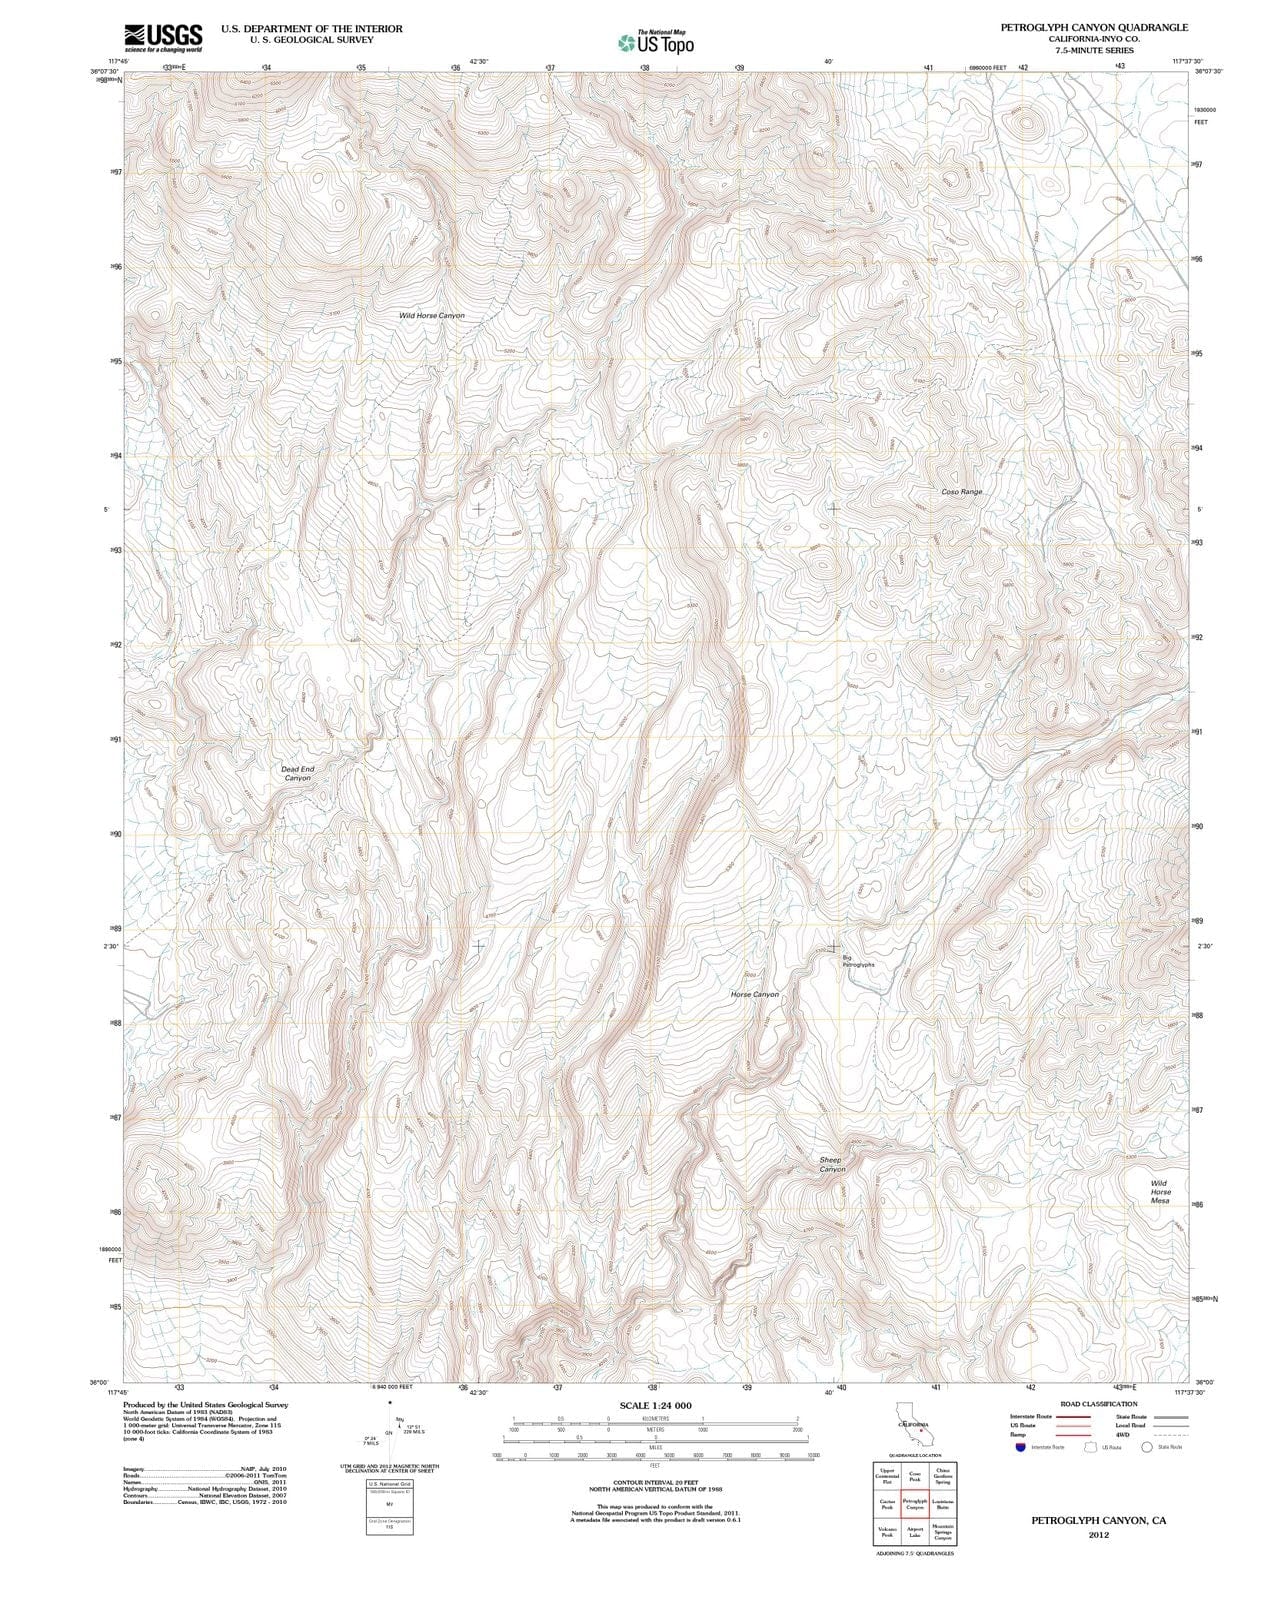 2012 Petroglyph Canyon, CA - California - USGS Topographic Map